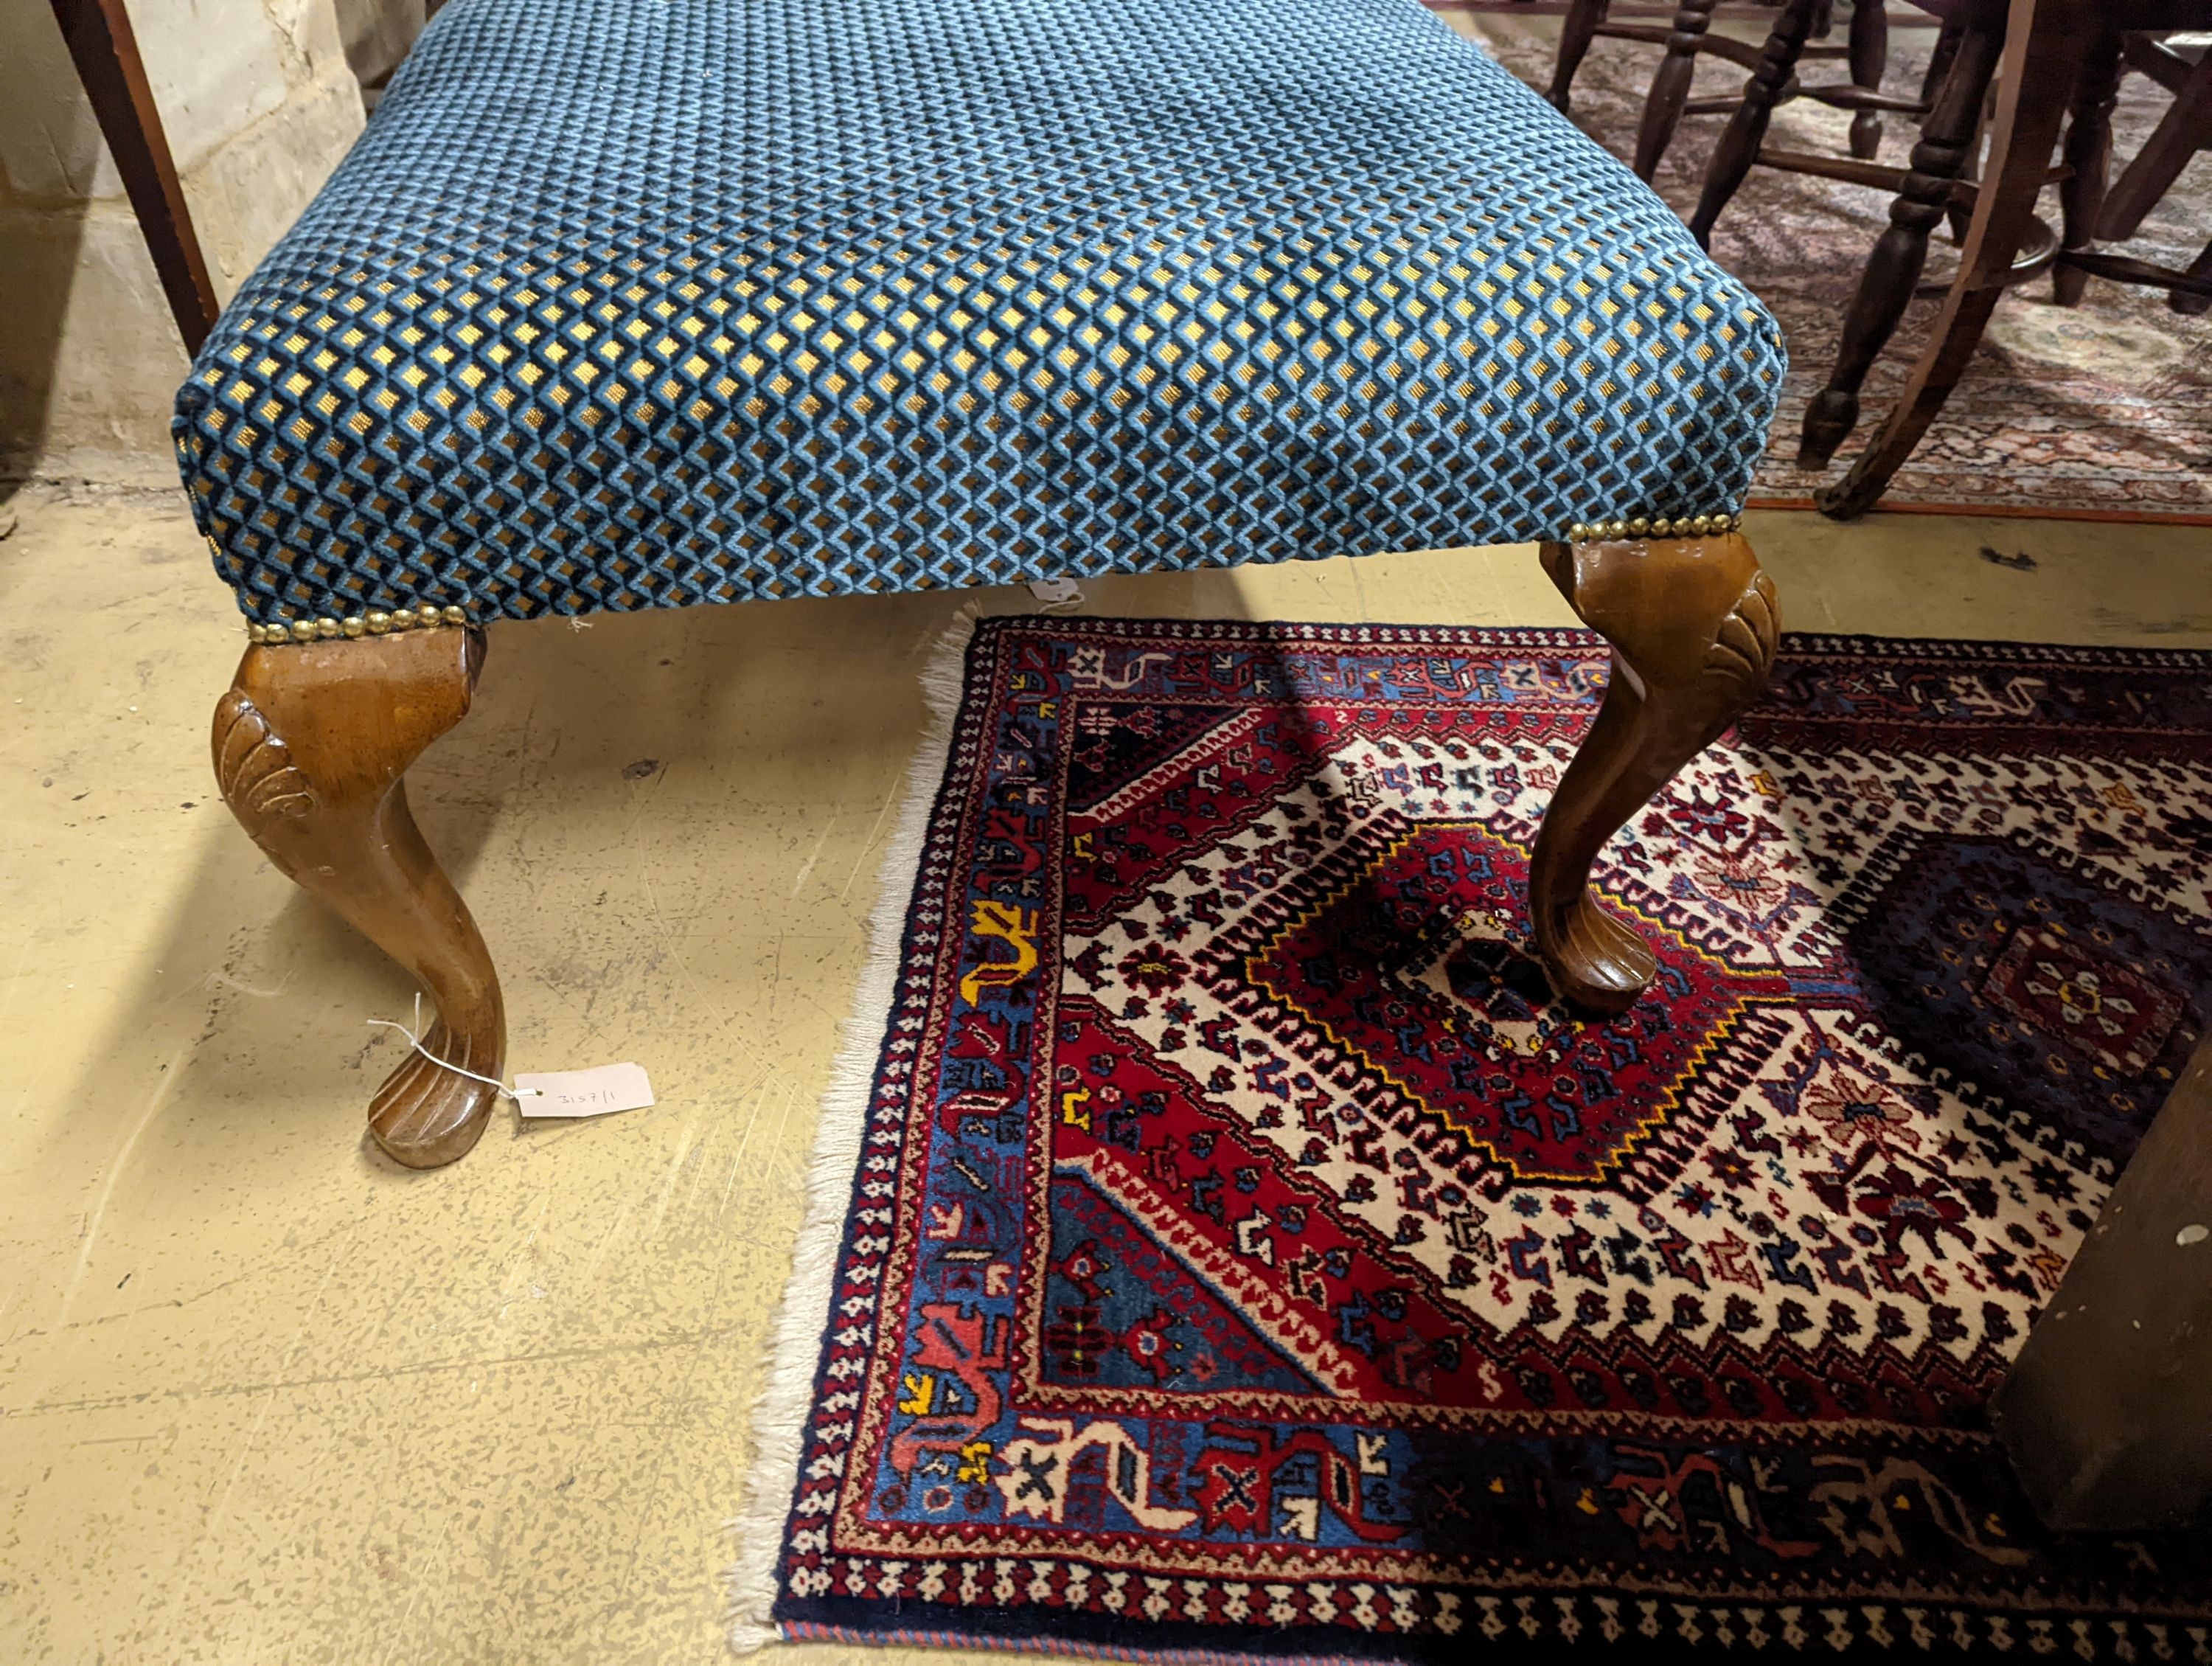 An upholstered footstool. W-117cm, D-73cm, H-44cm.